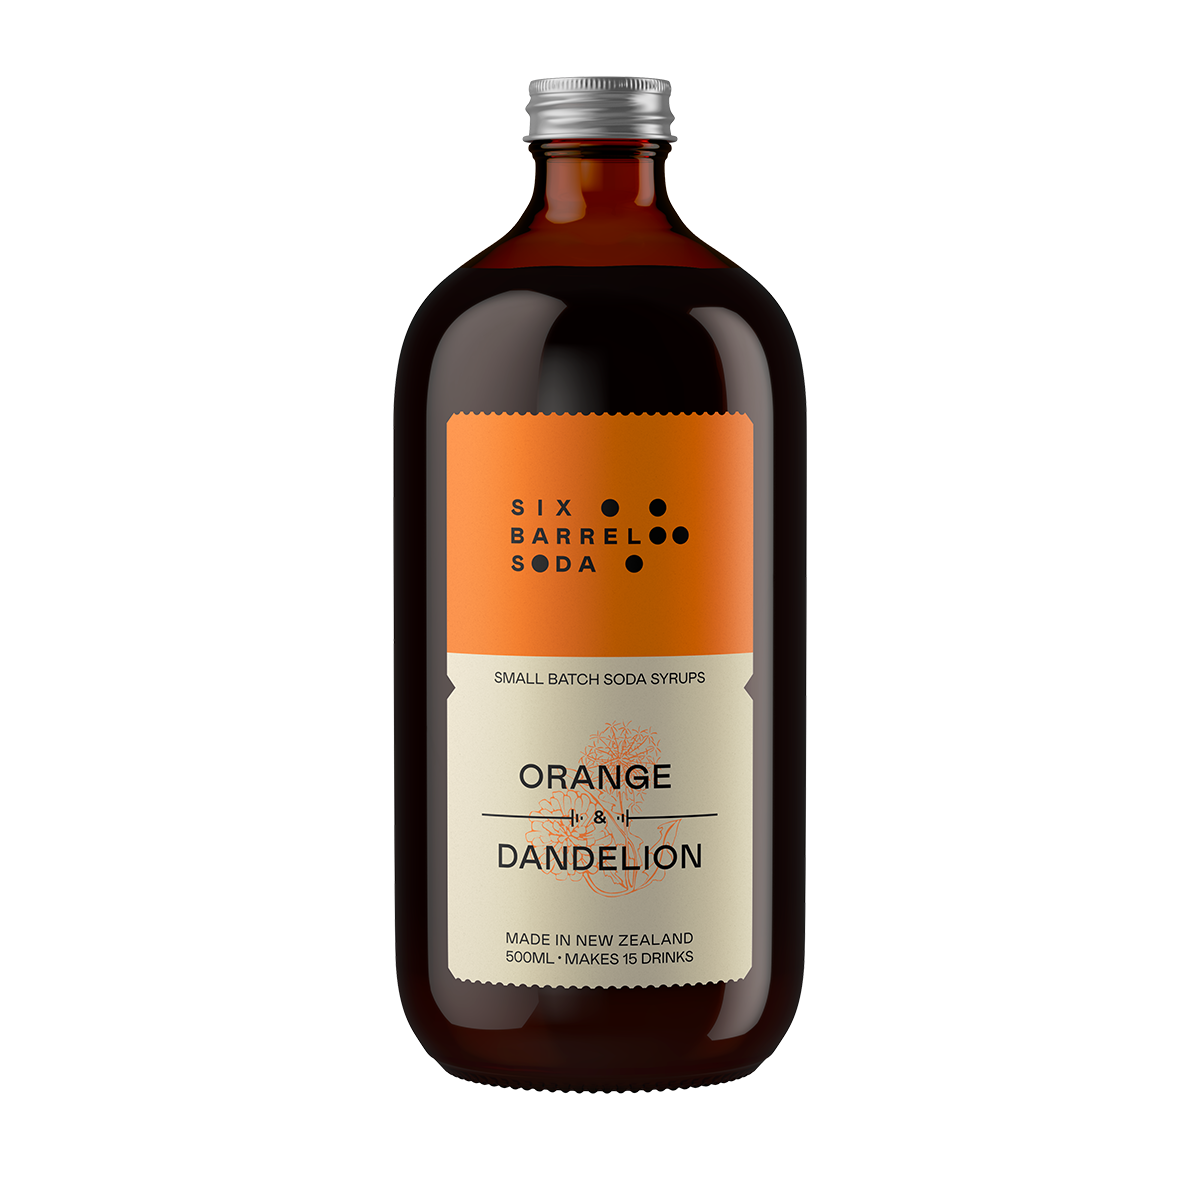 Six Barrel Soda Syrup - Orange & Dandelion - Front